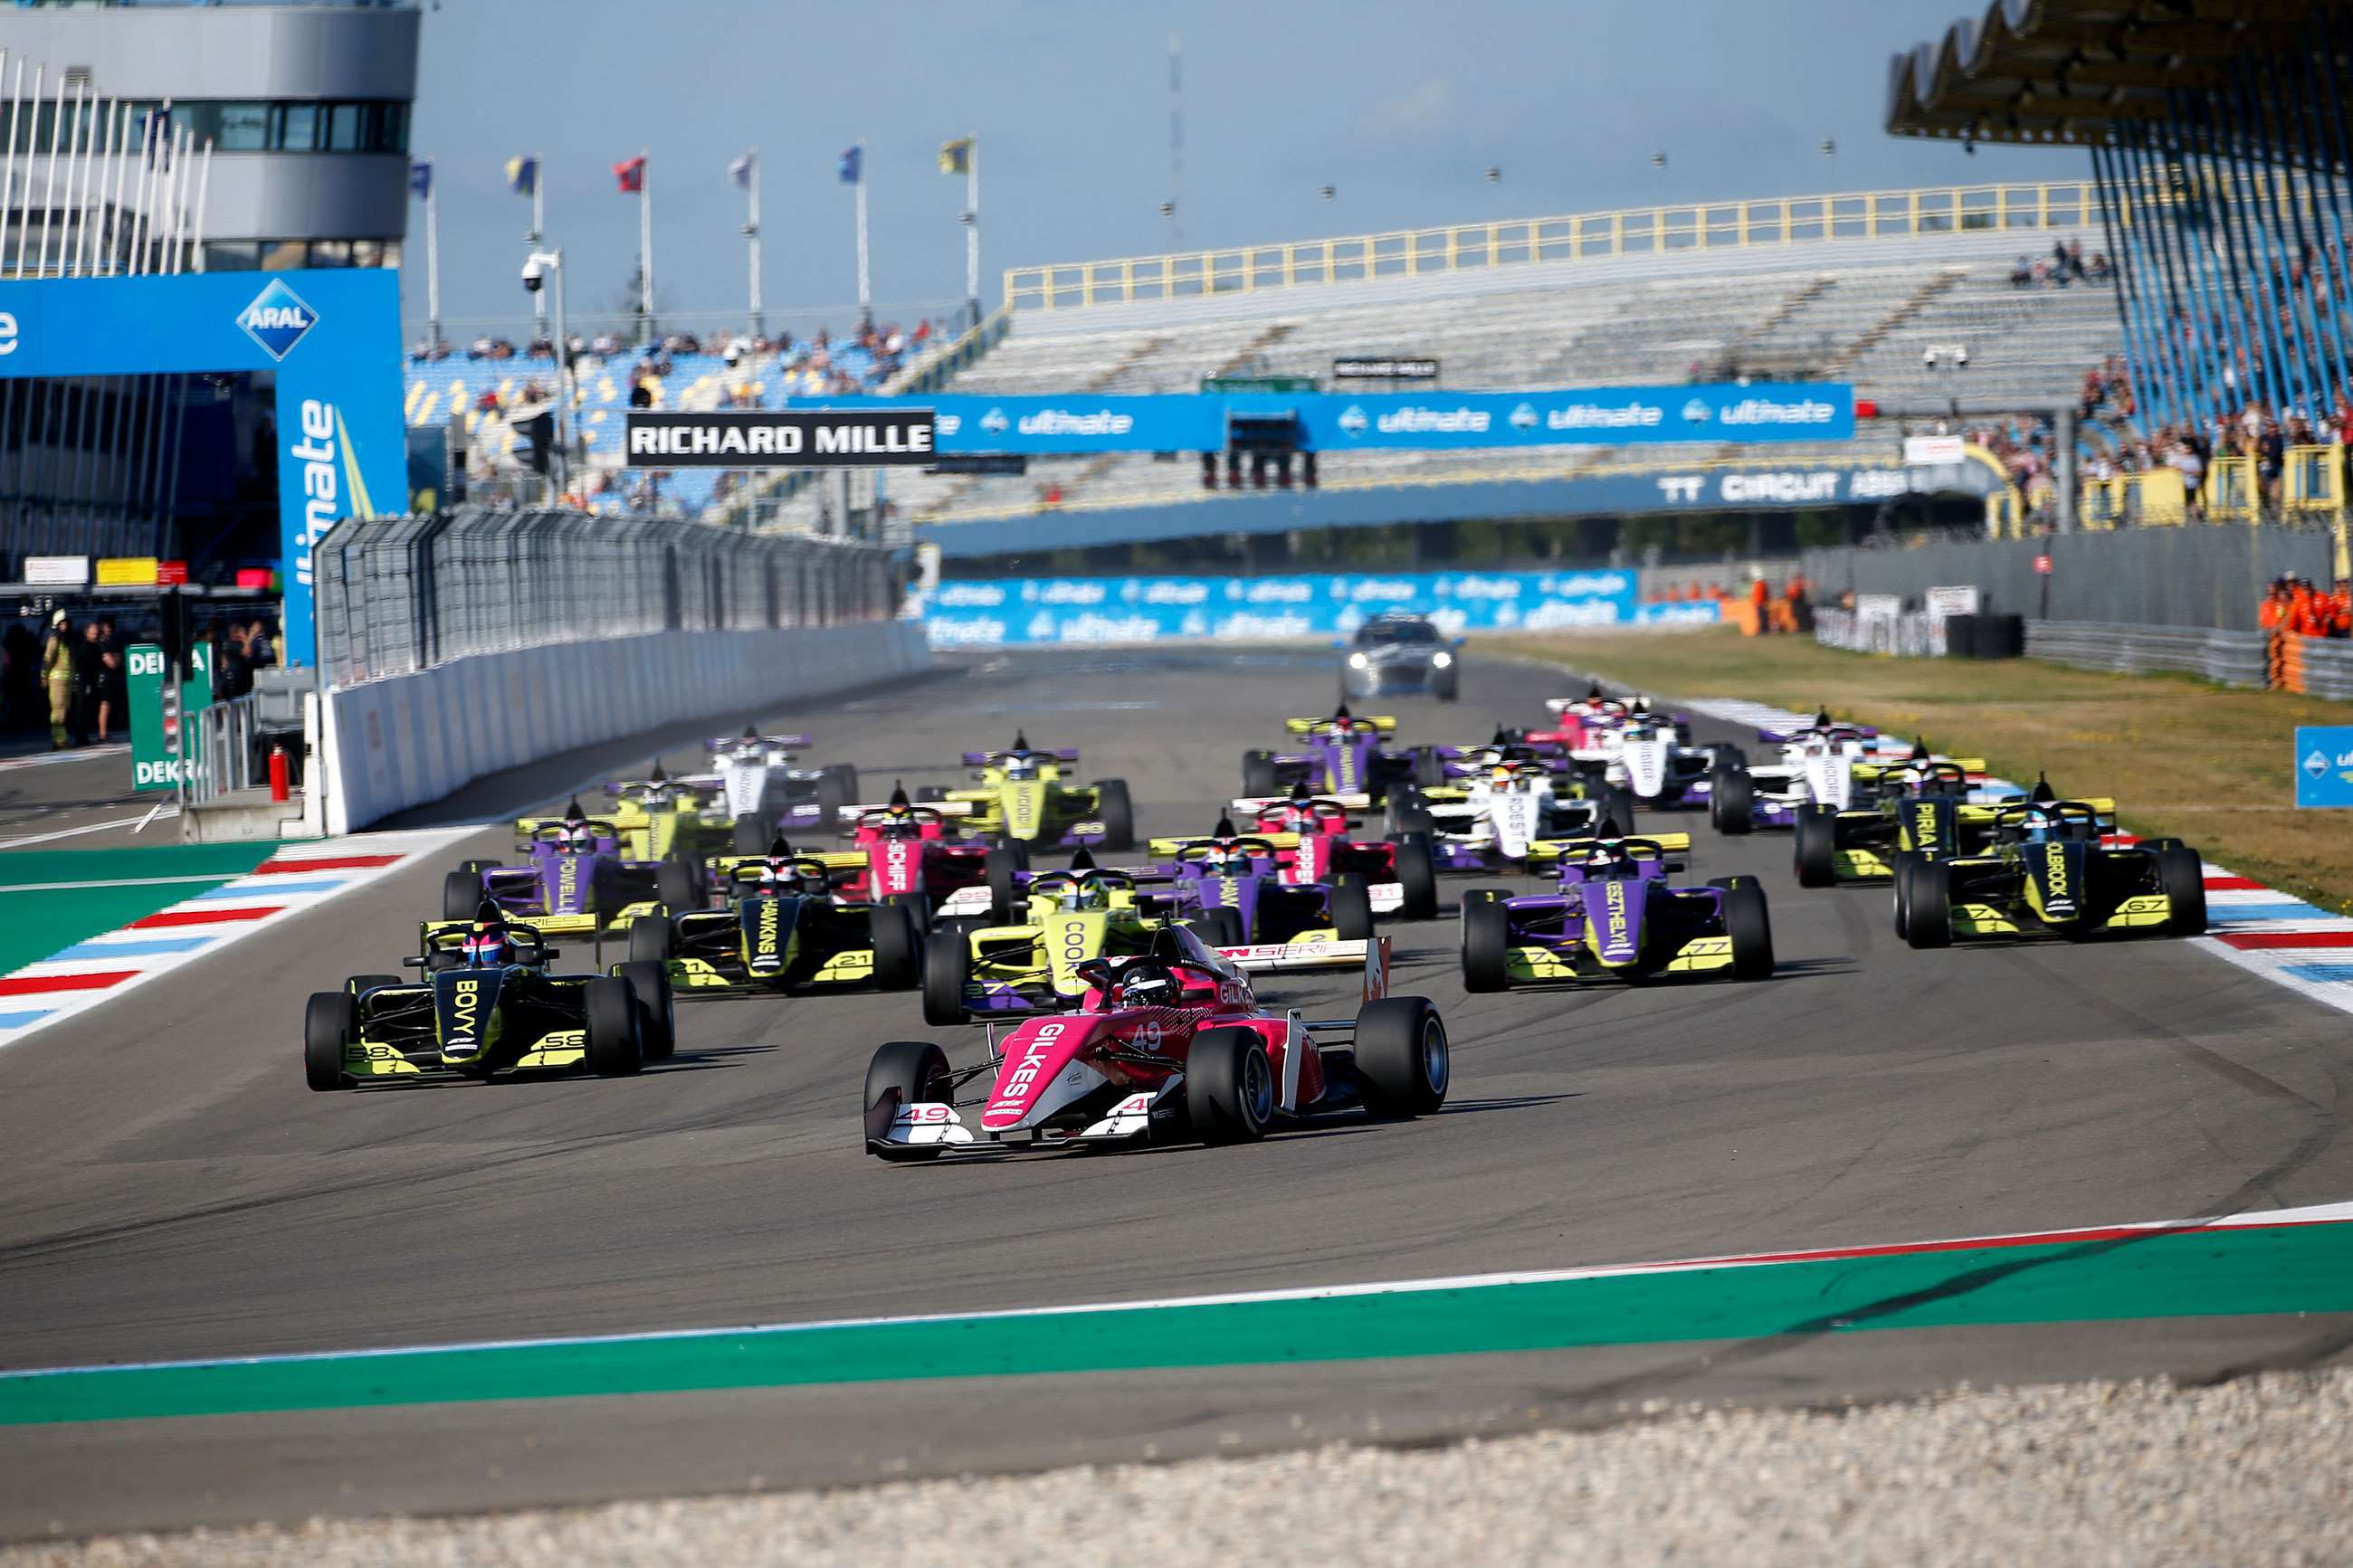 w-series-formula-1-2020-assen-2019-alexander-trienitz-motorsport-images-goodwood-16012020.jpg